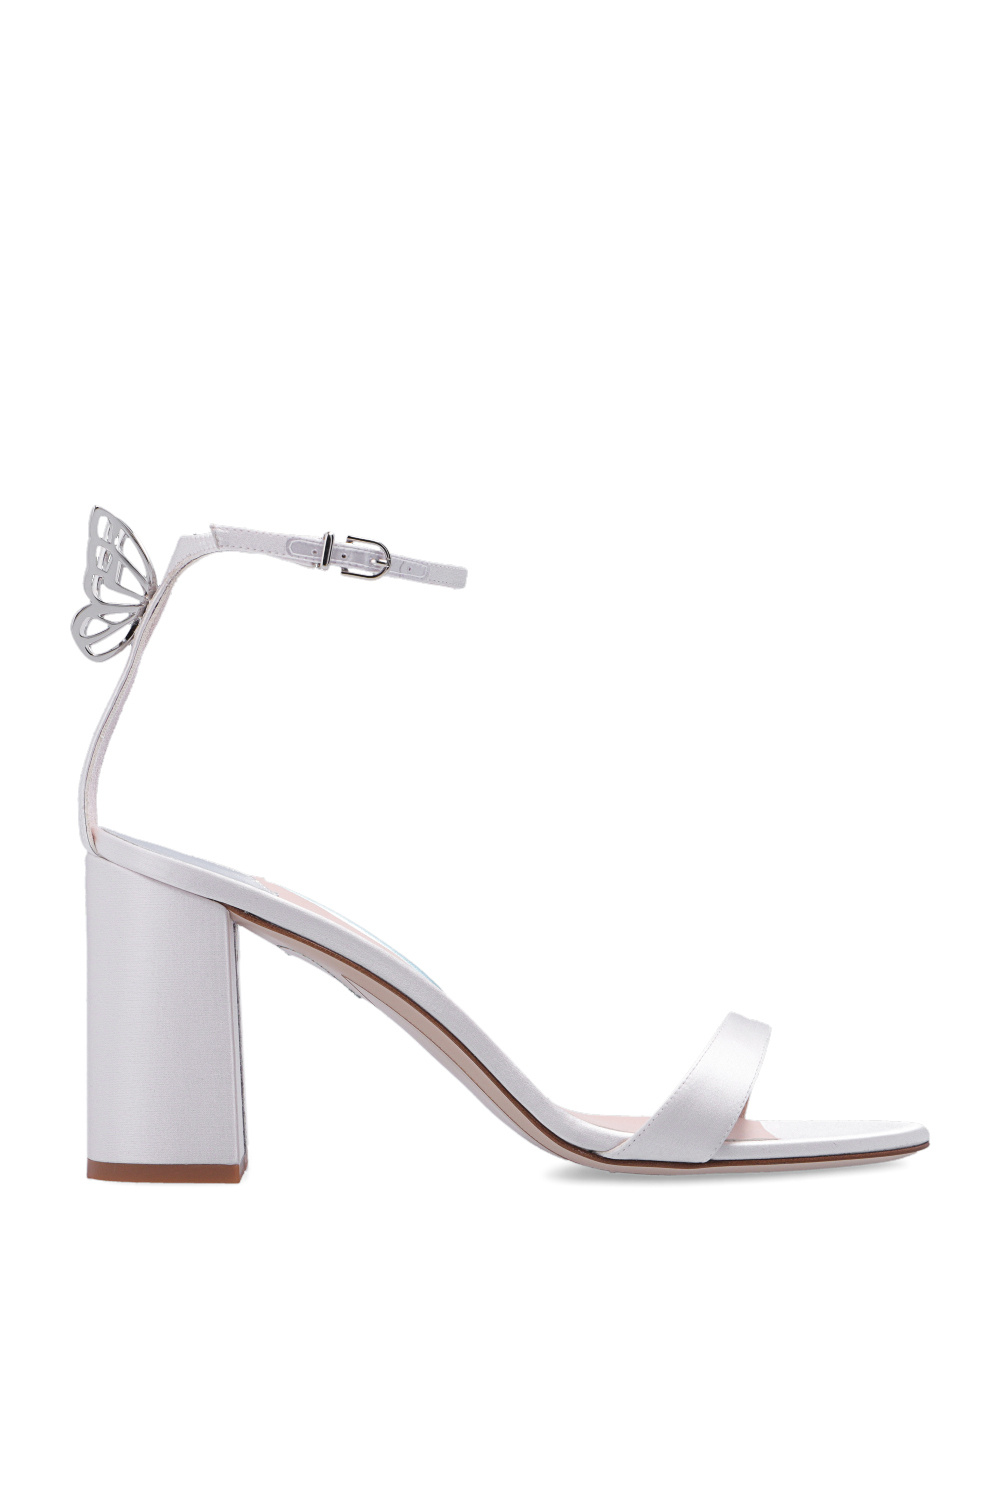 Sophia Webster ‘Mariposa’ heeled sandals